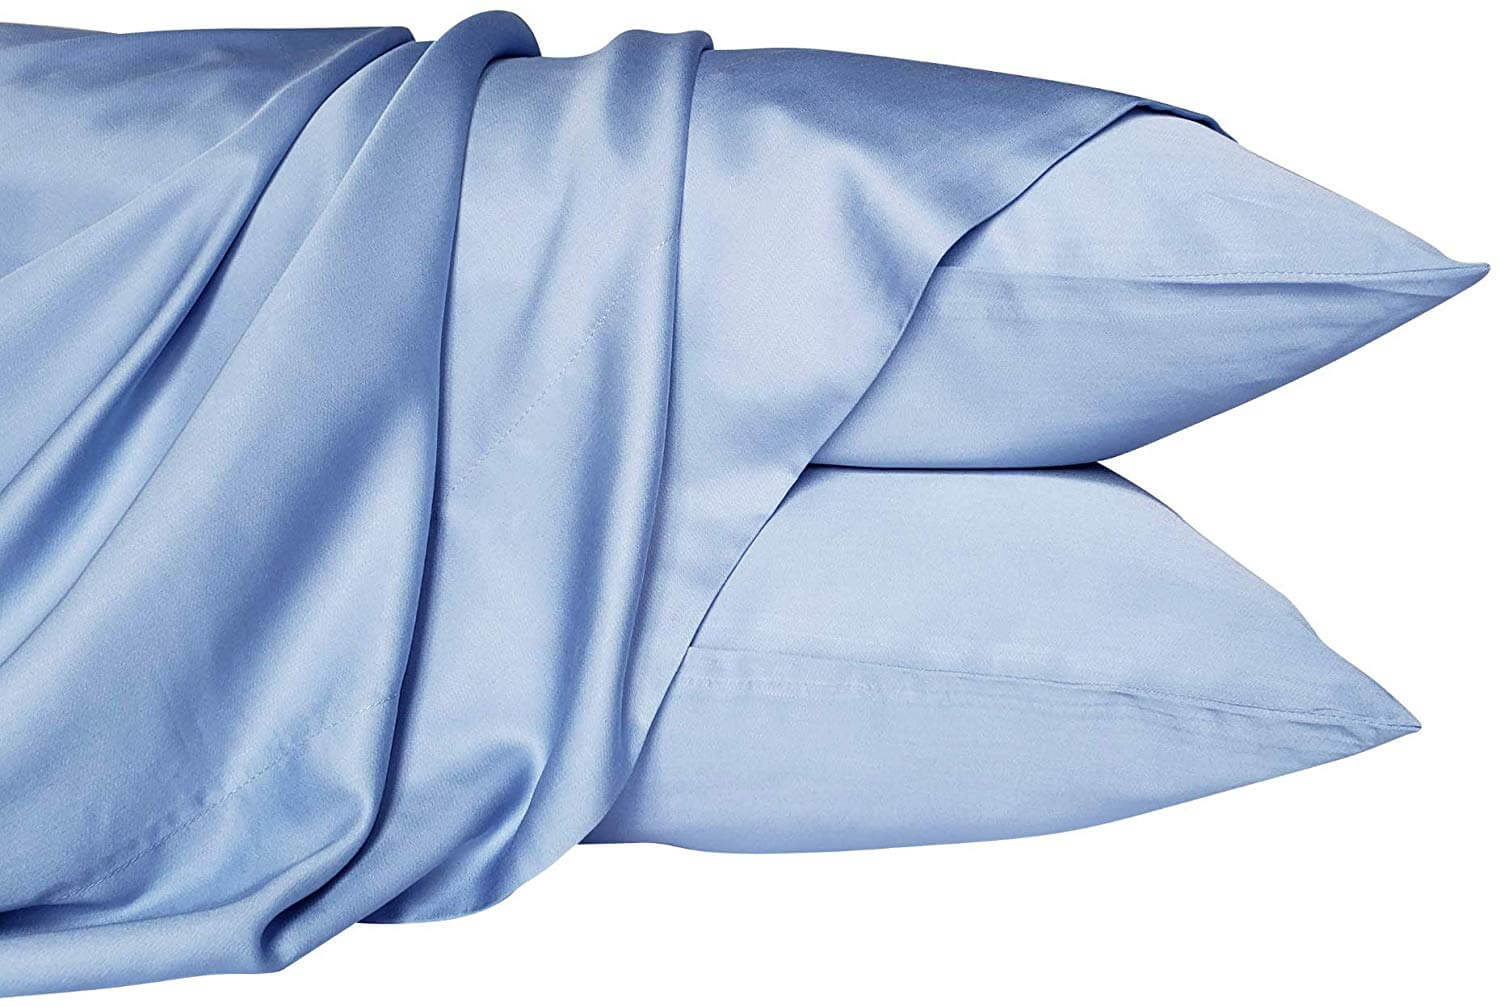 ZENLUSSO Bed Sheet Set Luxury 100% Bamboo Sheets - Hypoallergenic, Deep Pockets, Silky Soft (Blue, Queen)